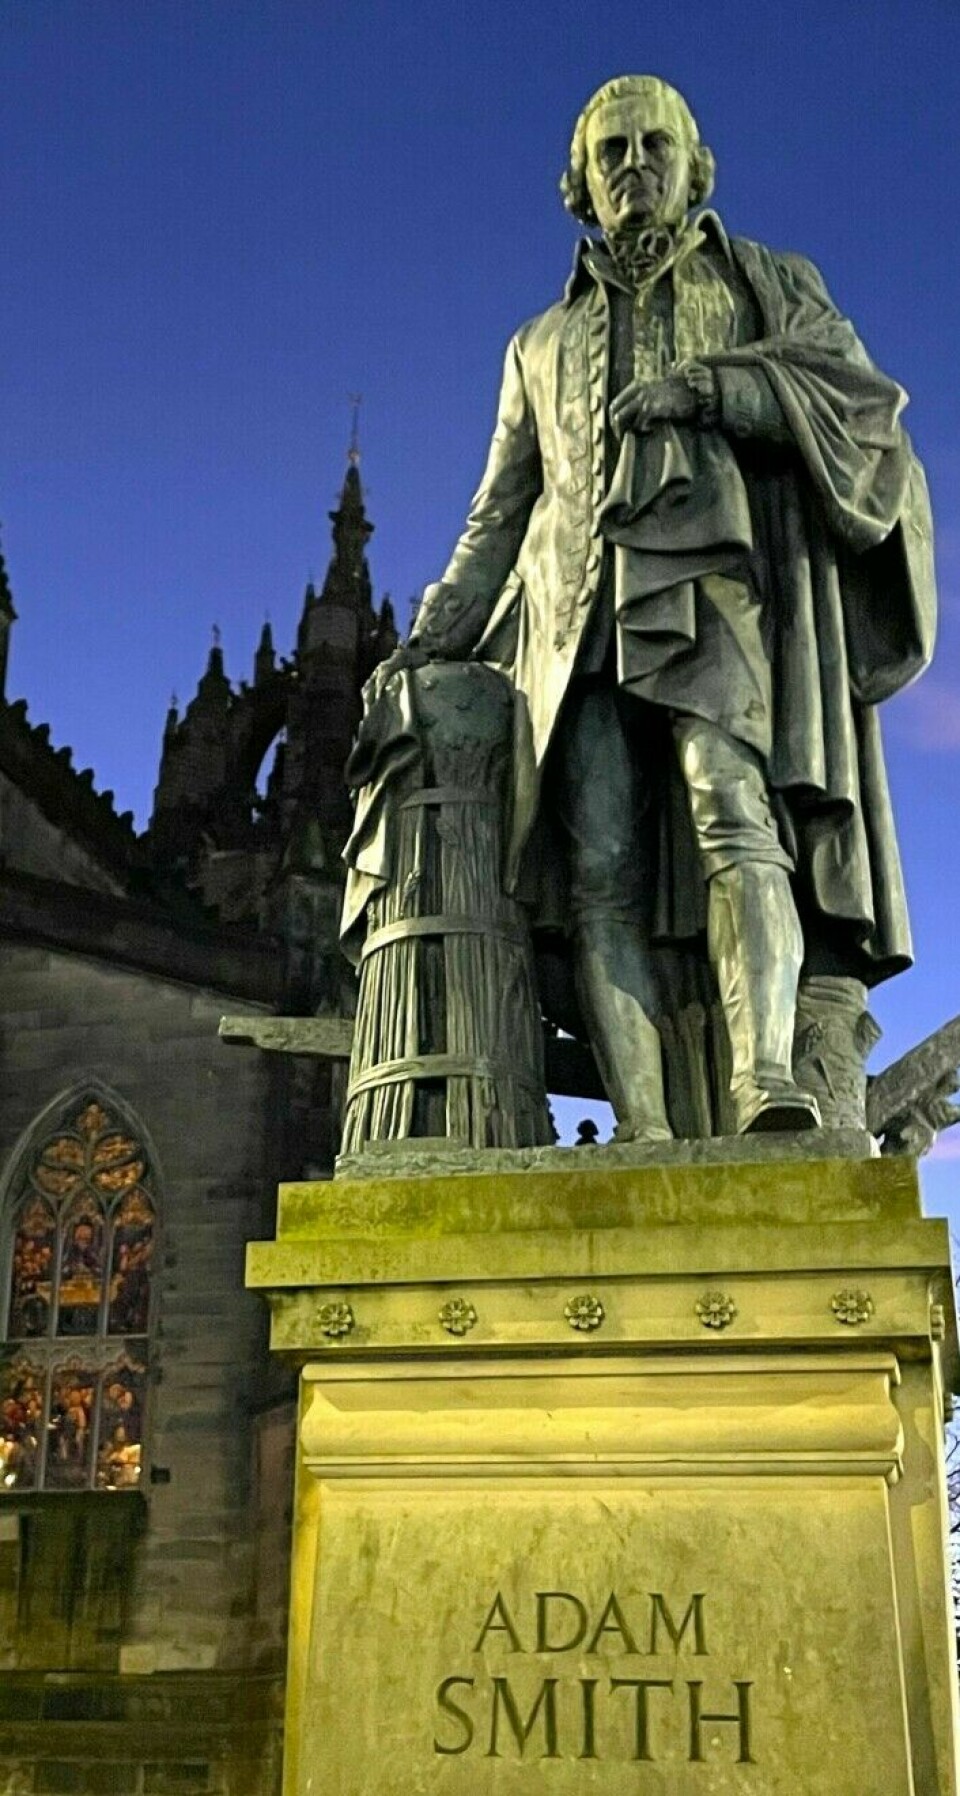 This statue of Adam Smith is in Edinburgh, Scotland.